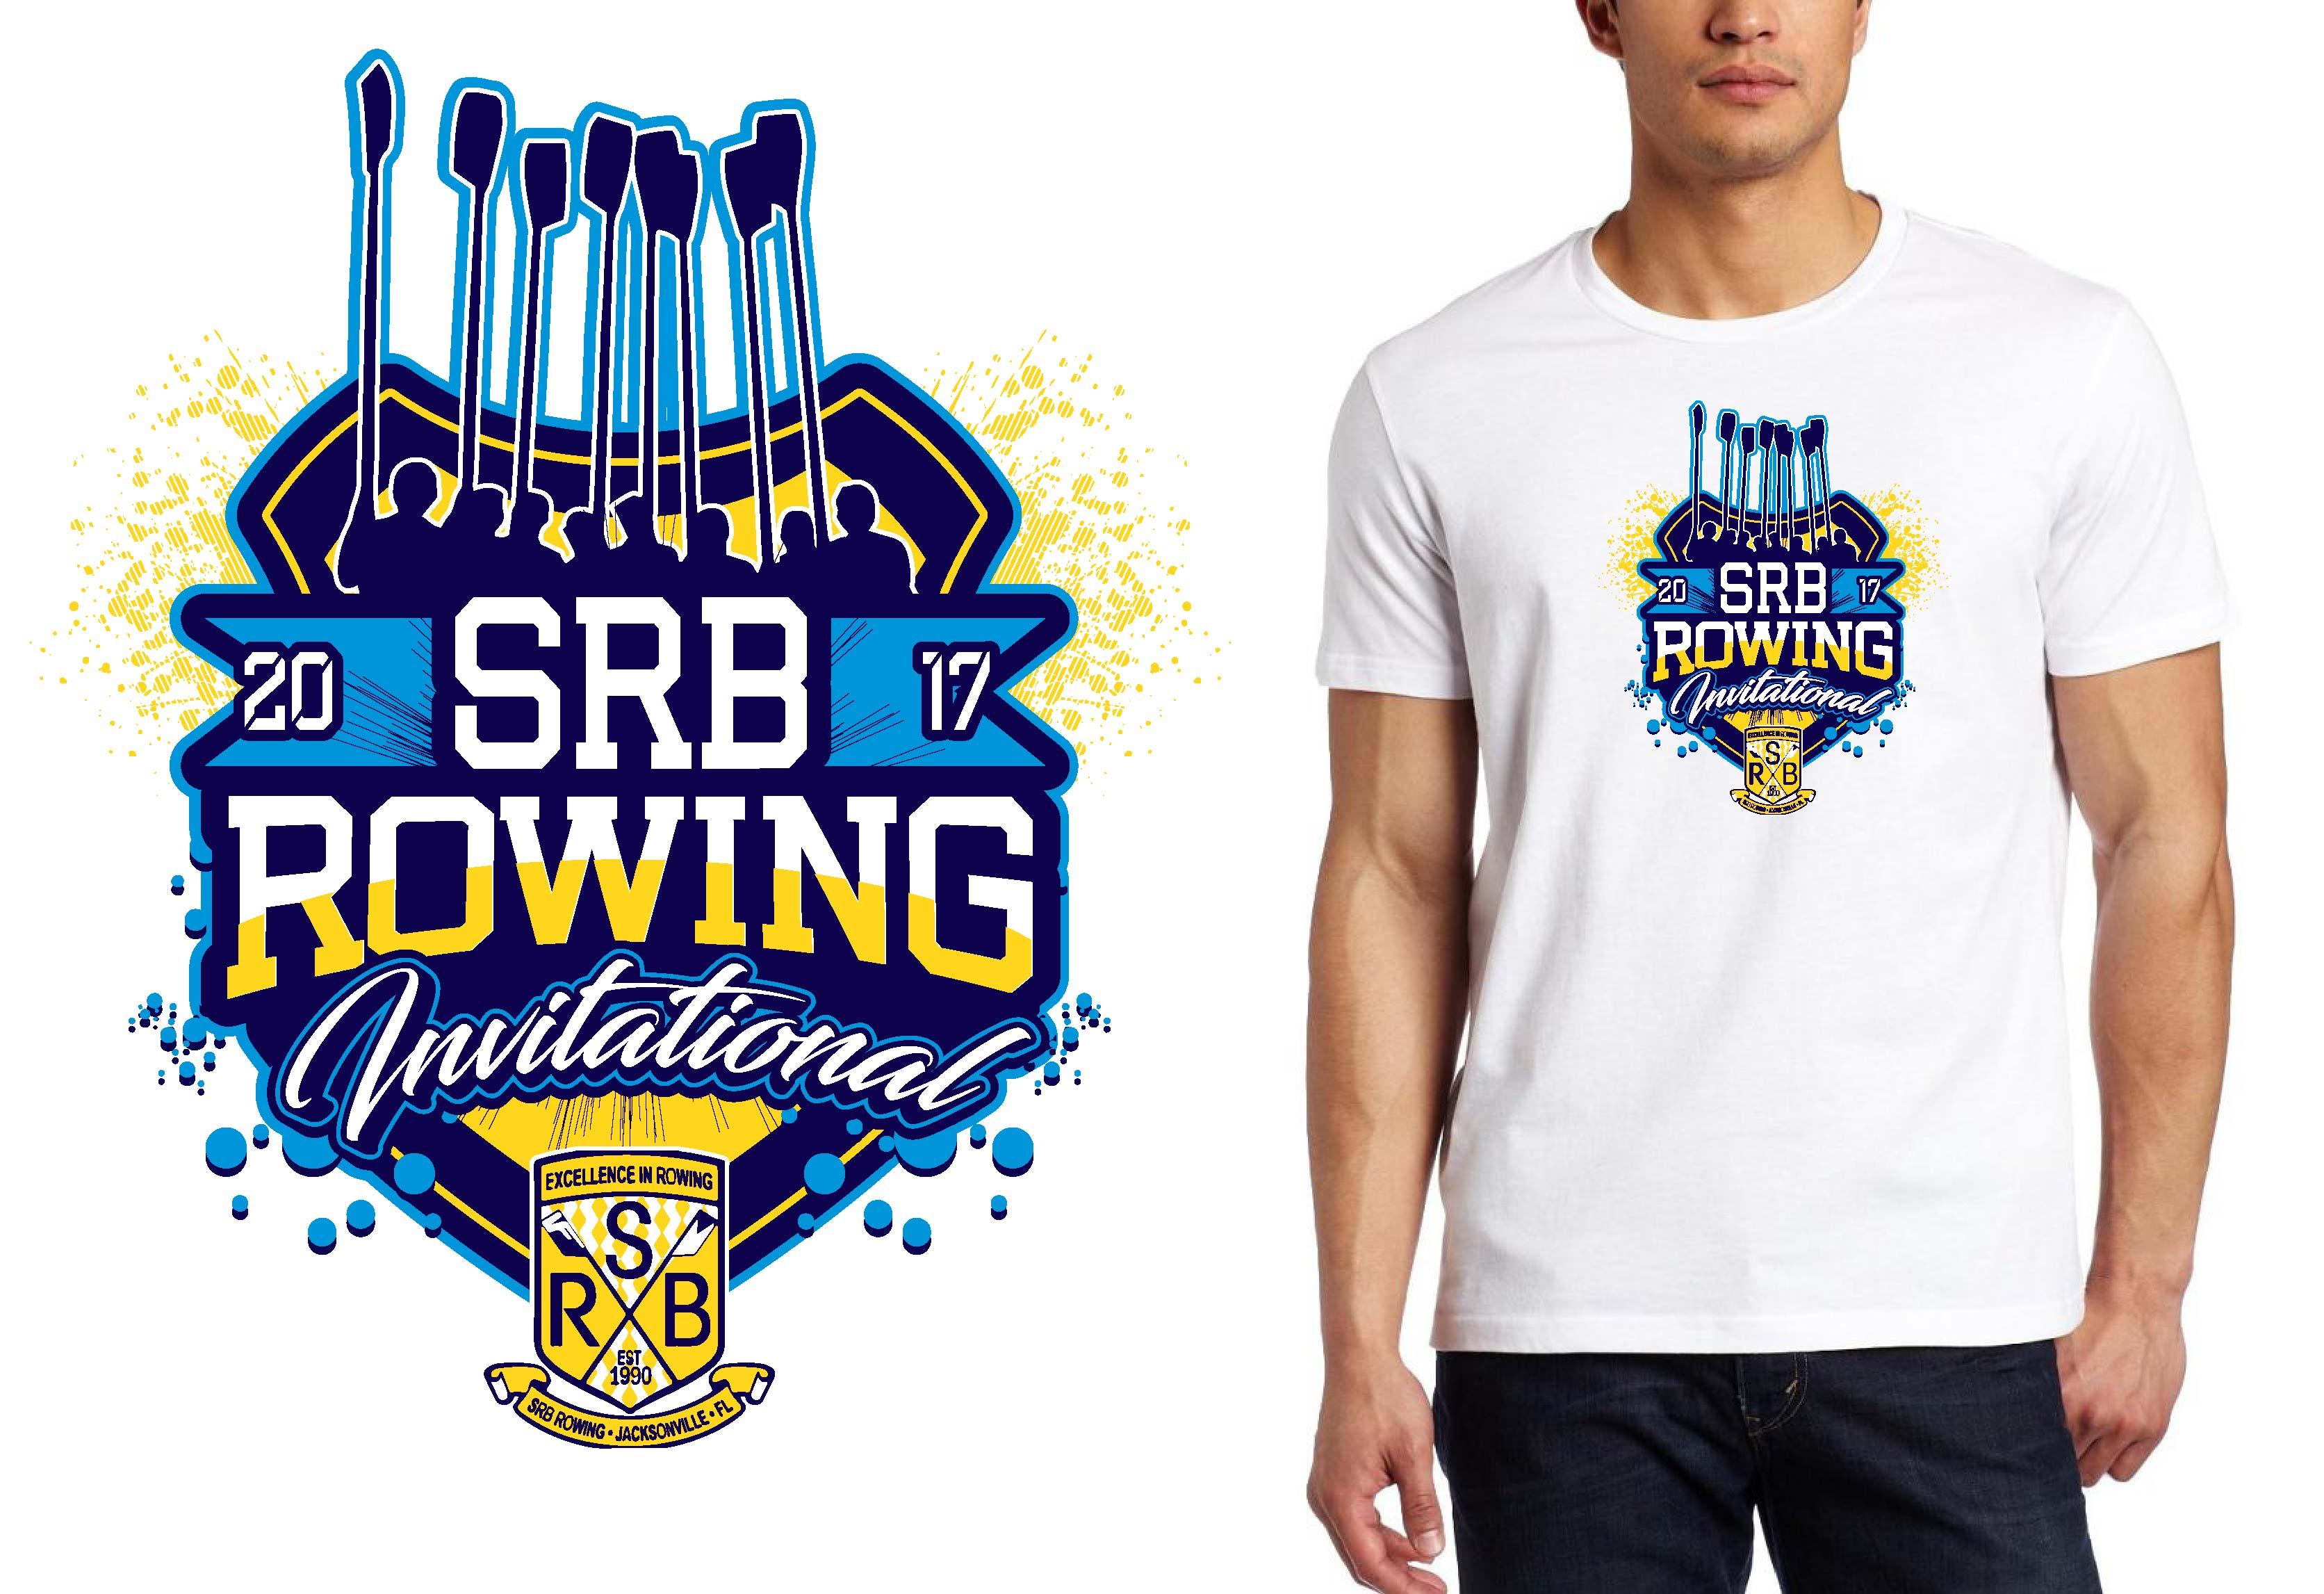 SRB Logo - ROWING REGATTA TSHIRT LOGO DESIGN SRB Rowing Invitational